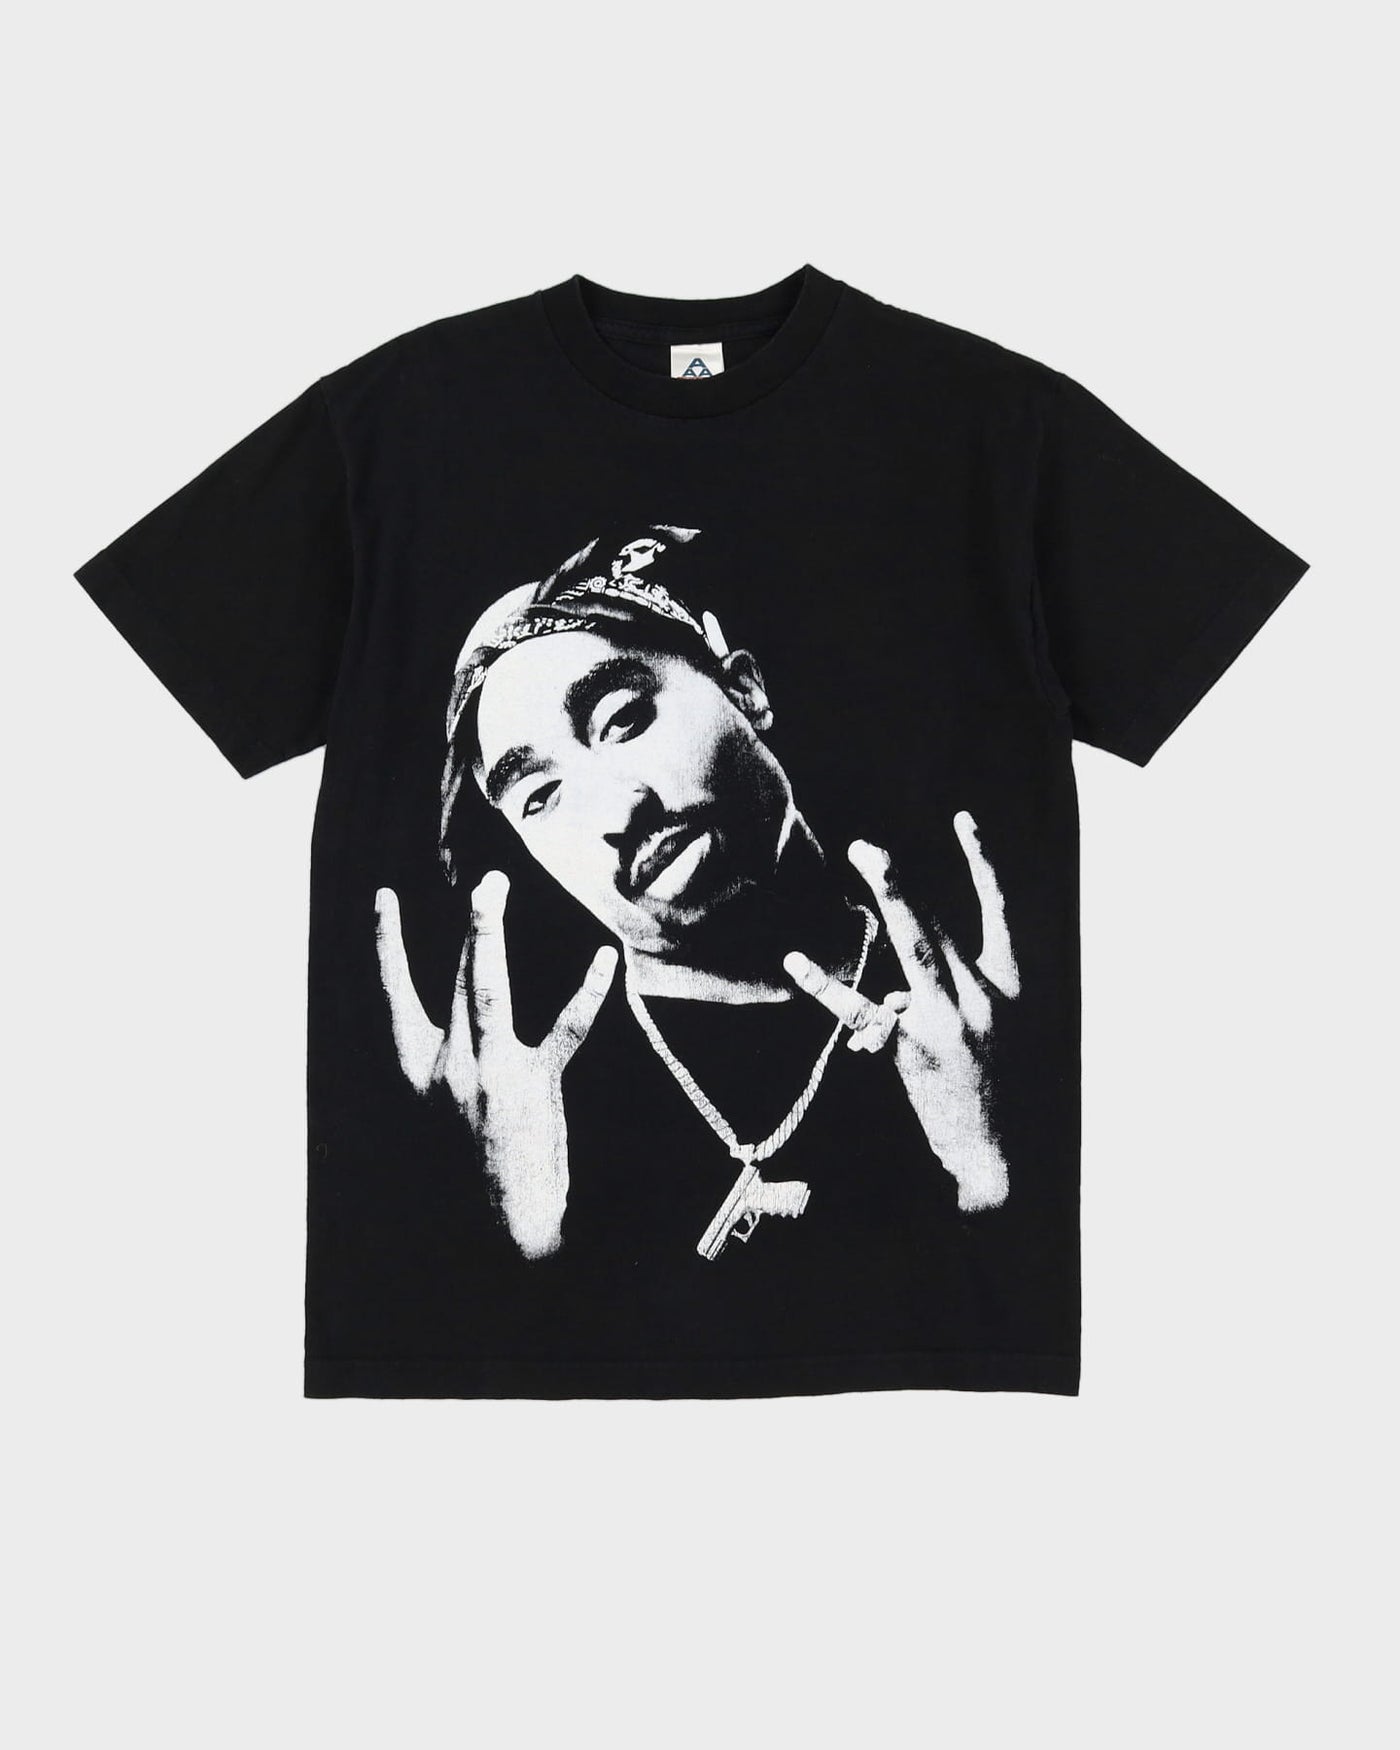 00s Tupac Black Graphic Band T-Shirt - M